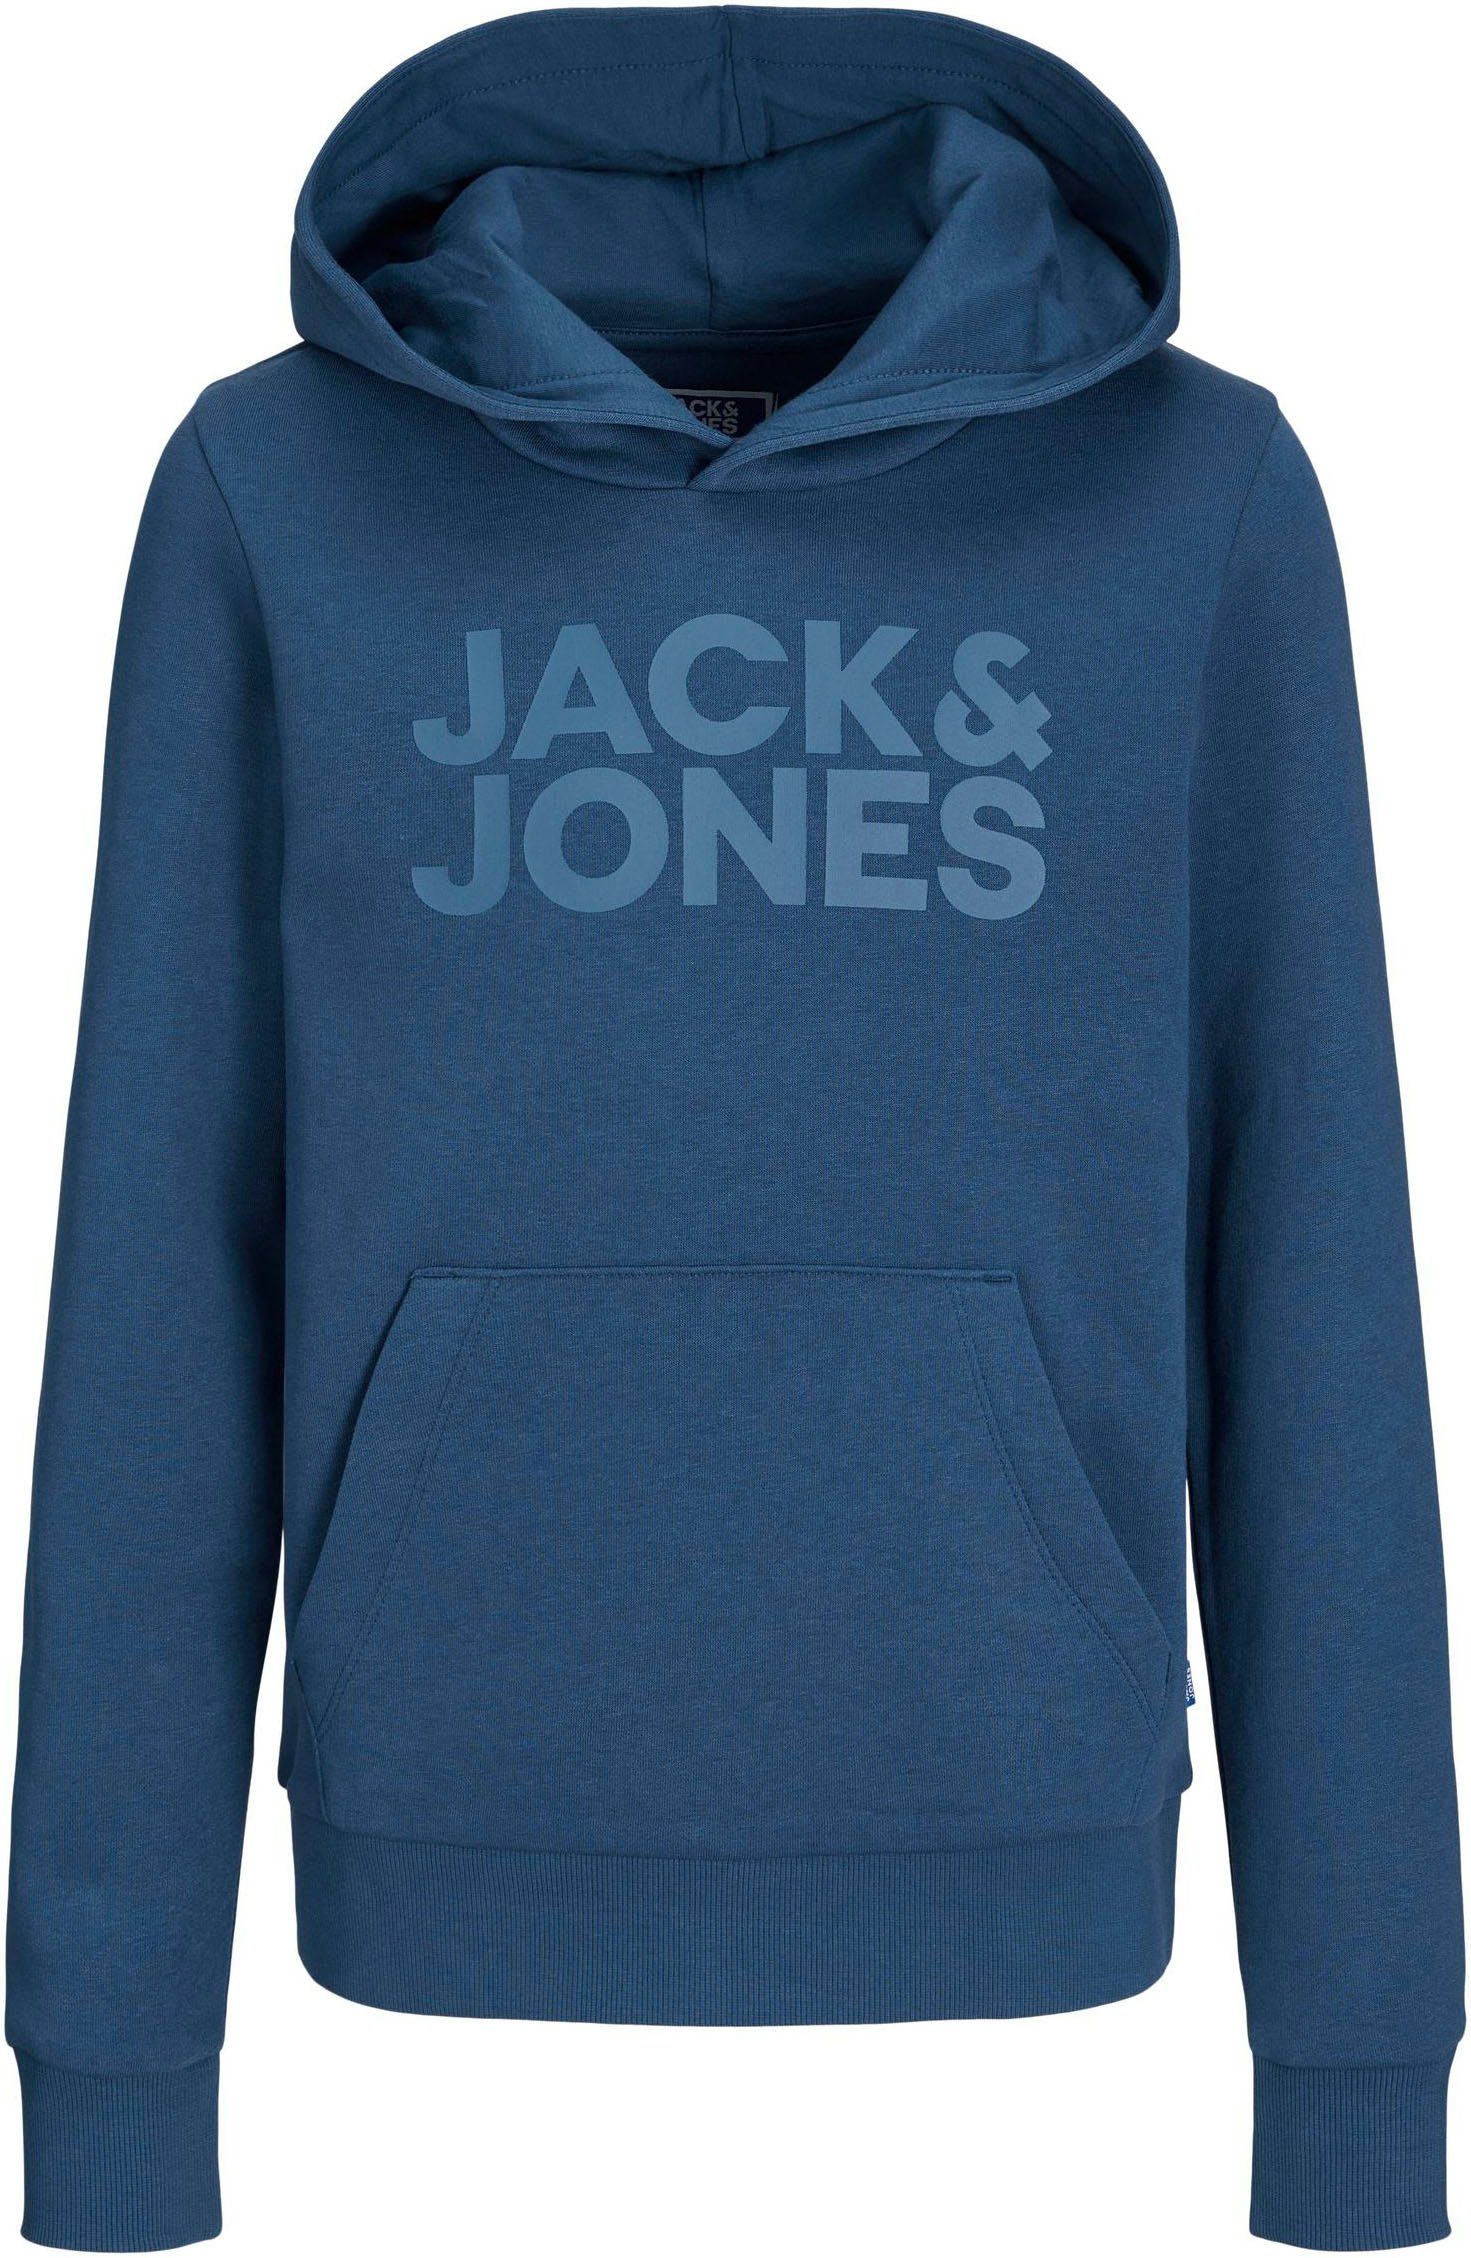 & Junior Kapuzensweatshirt Jack Jones blue LOGO SWEAT JJECORP HOOD ensign